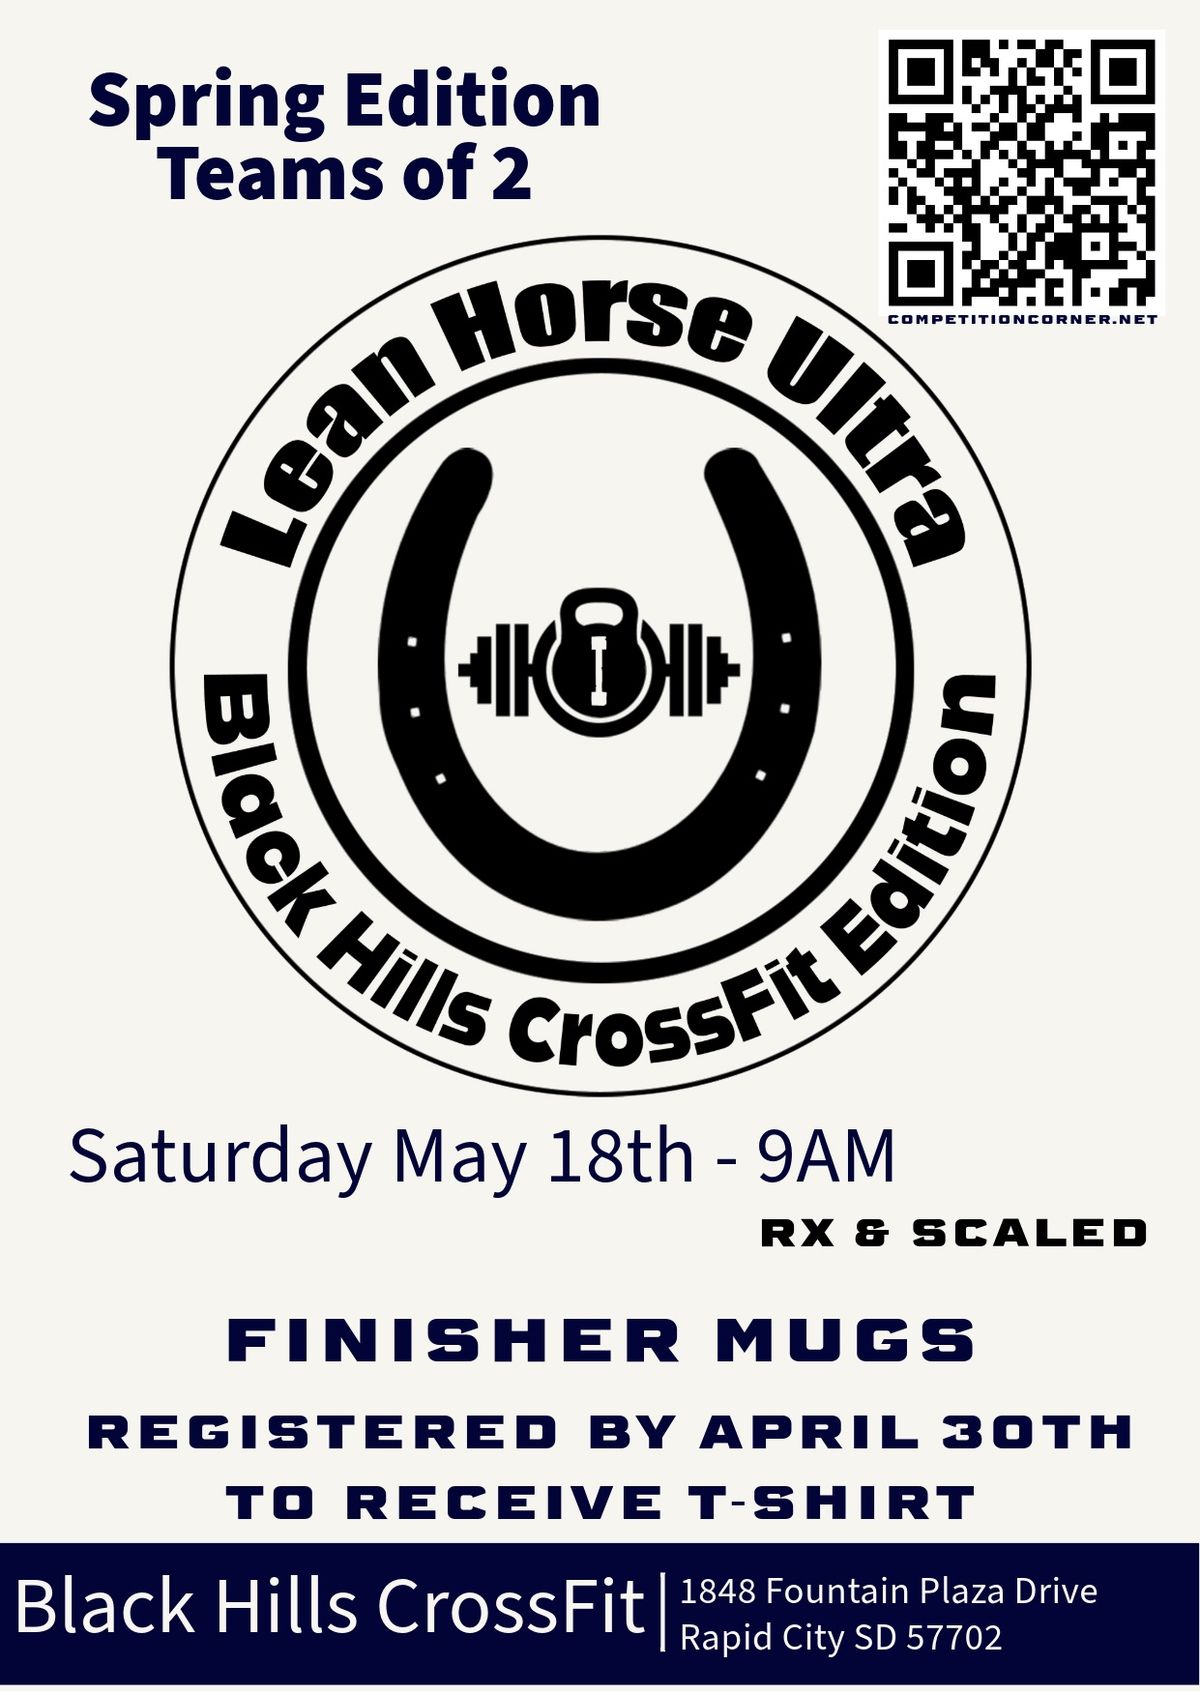 Lean Horse Black Hills CrossFit Spring Edition 